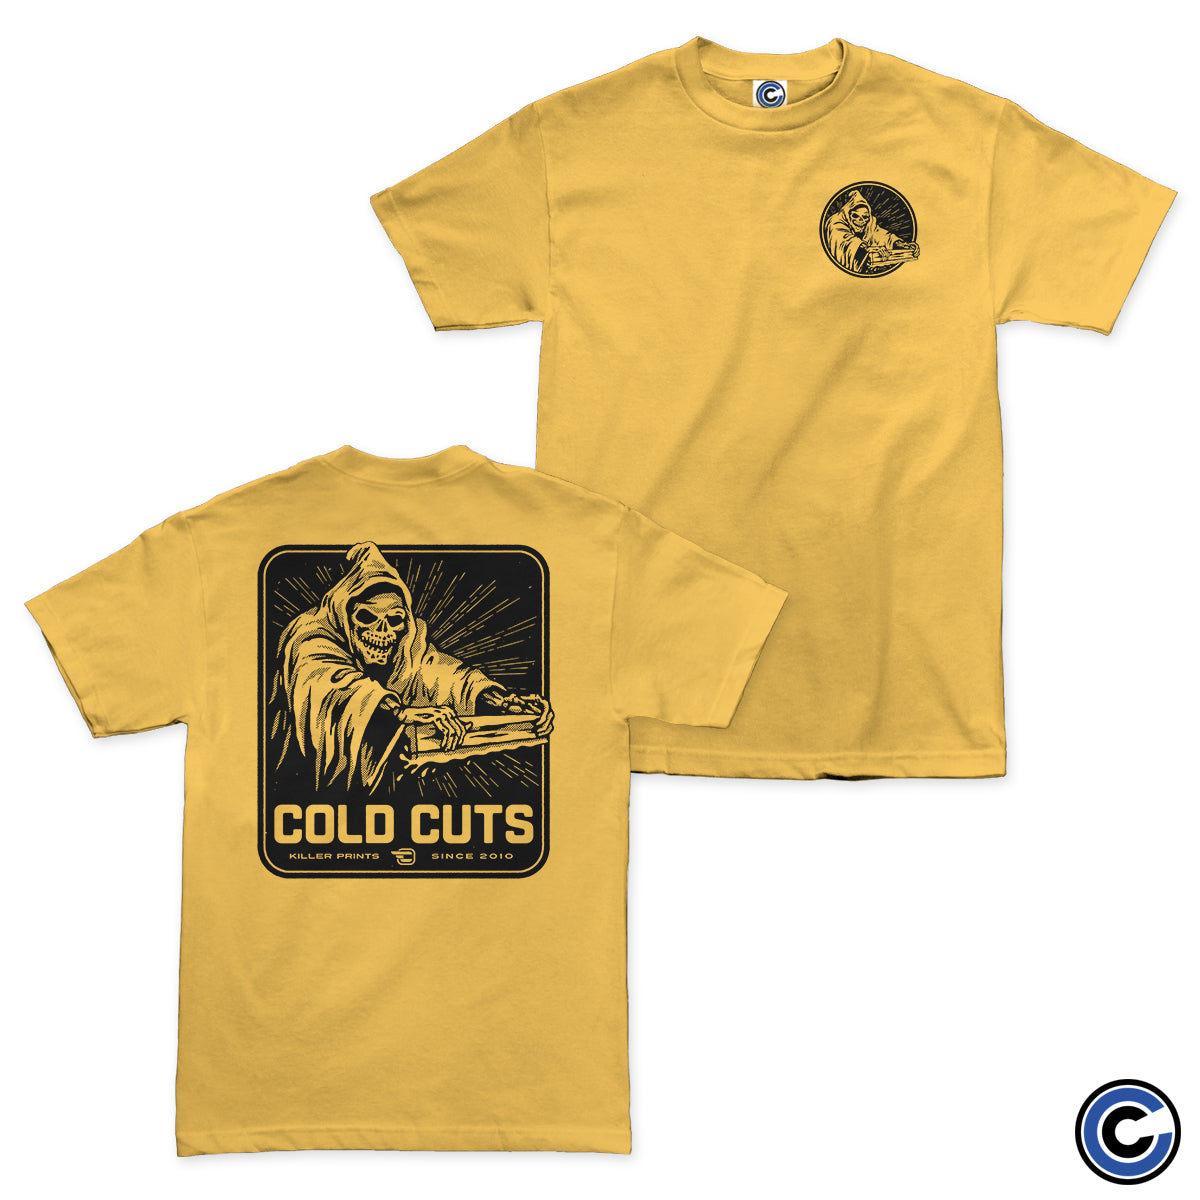 Cold Cuts "Night Reaper" Shirt